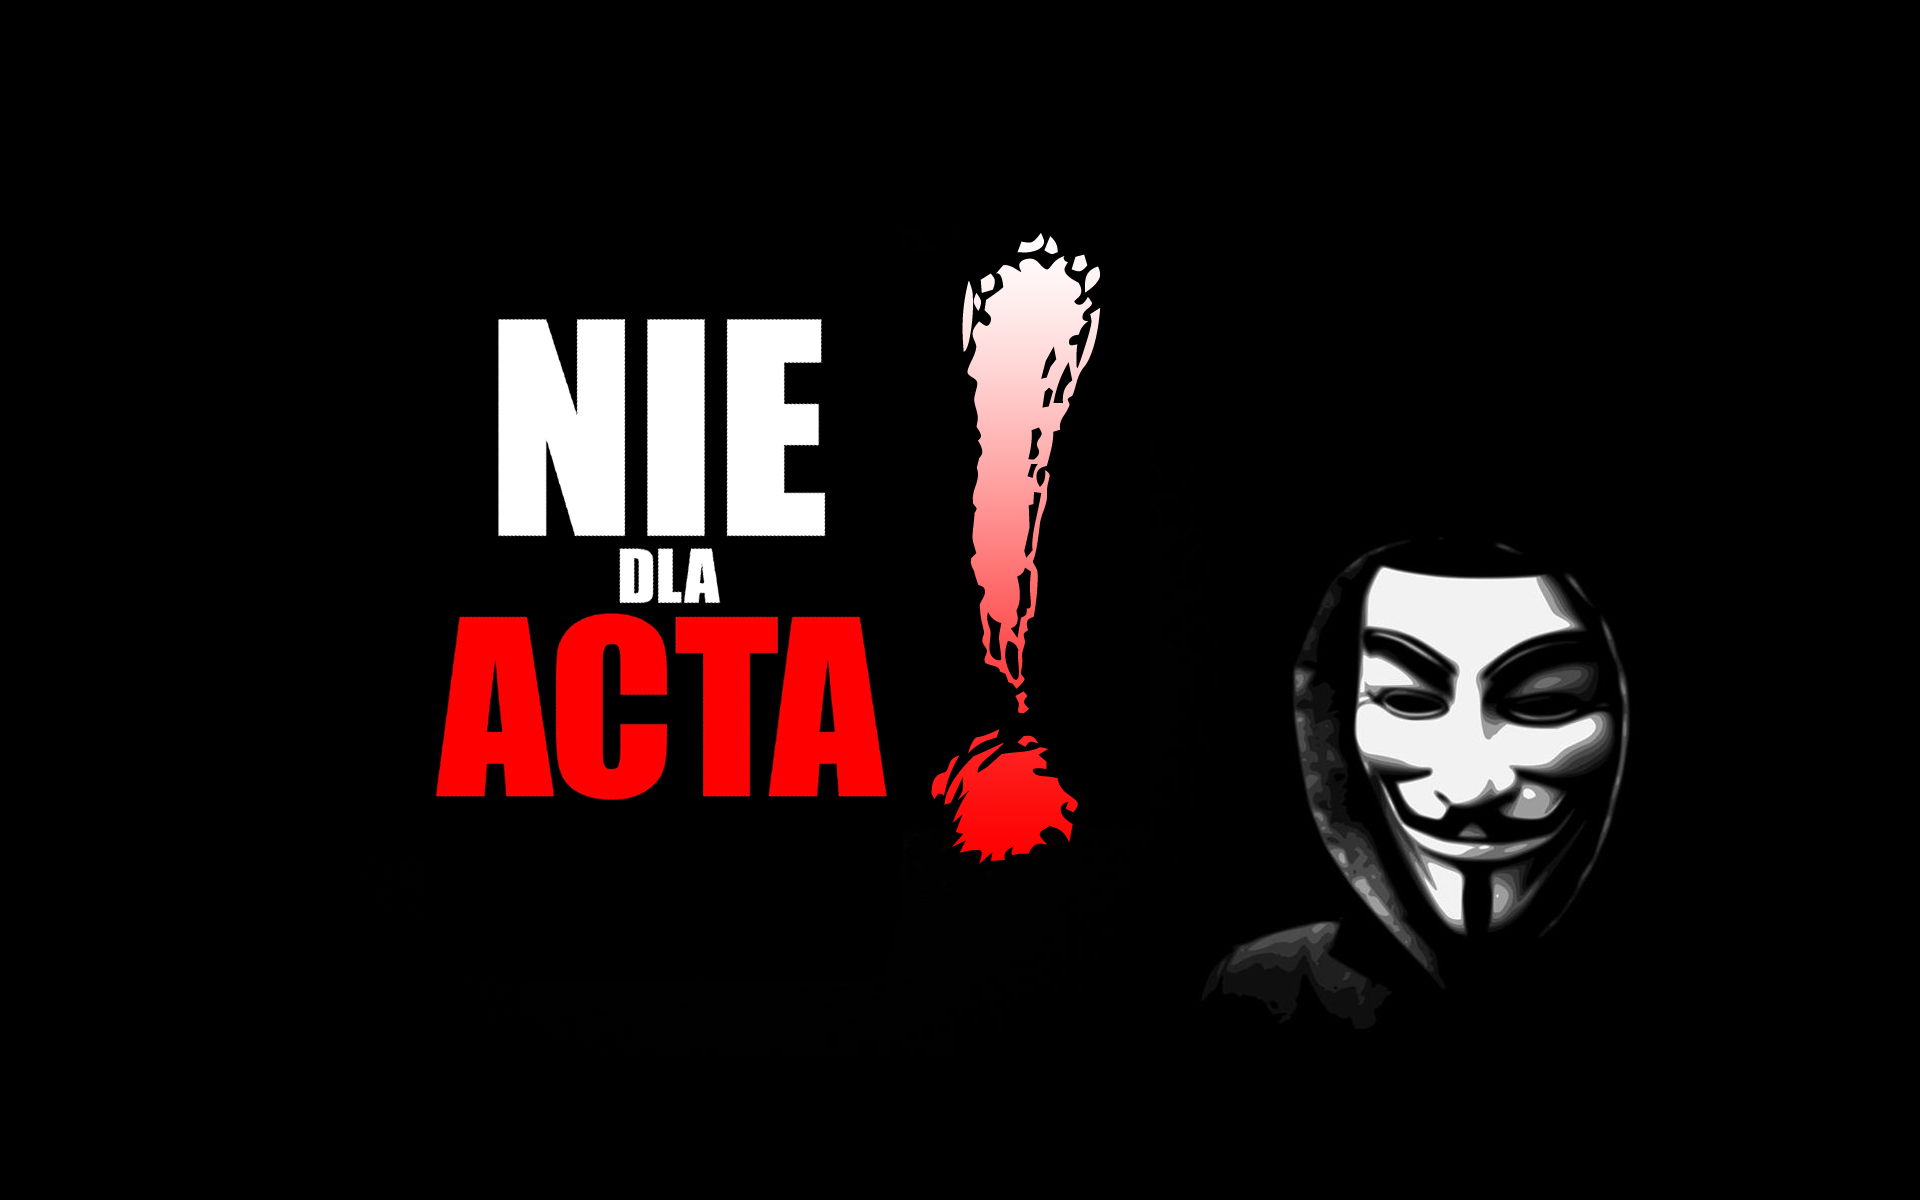 Acta 009 1920x1200 Nie dla Acta